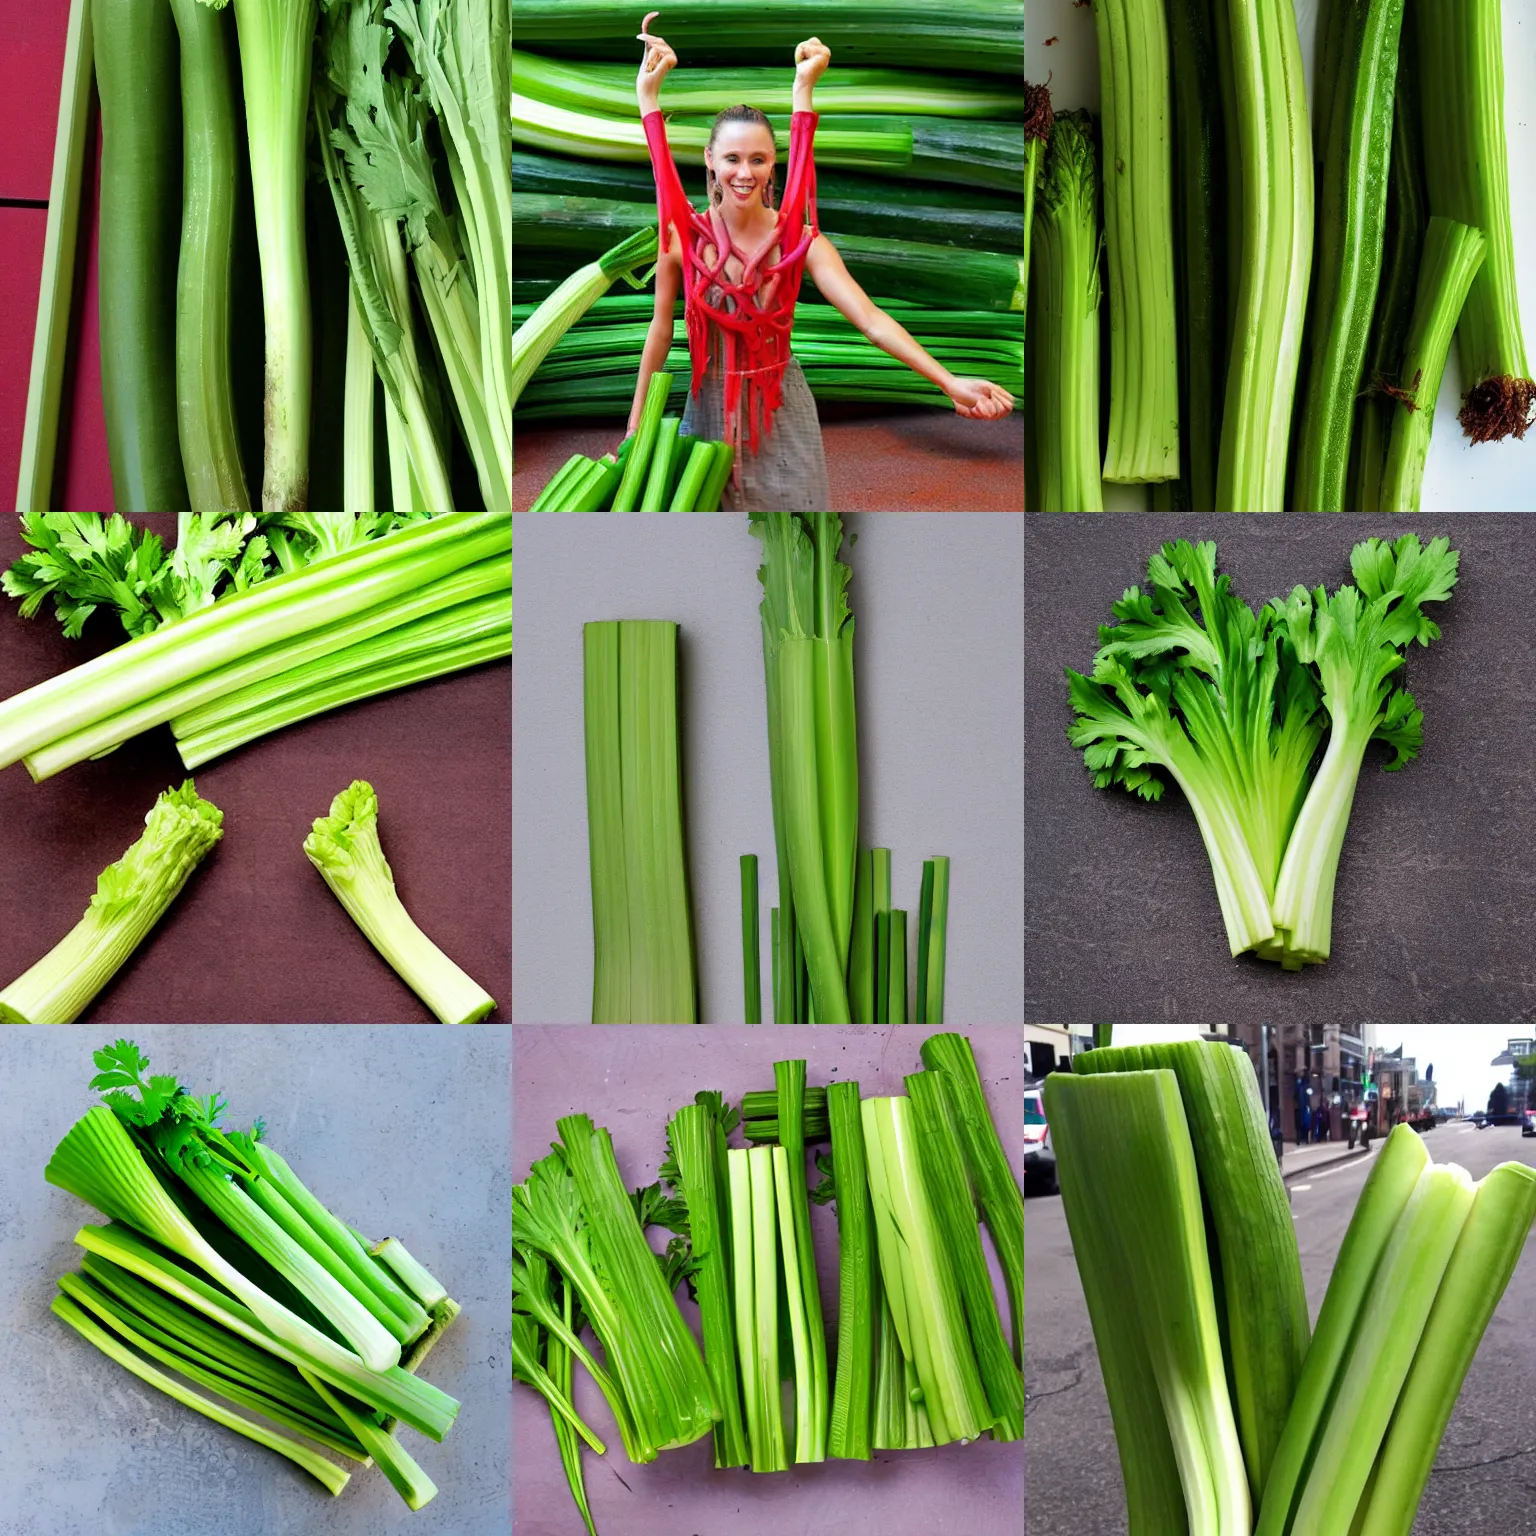 Prompt: humanoid celery